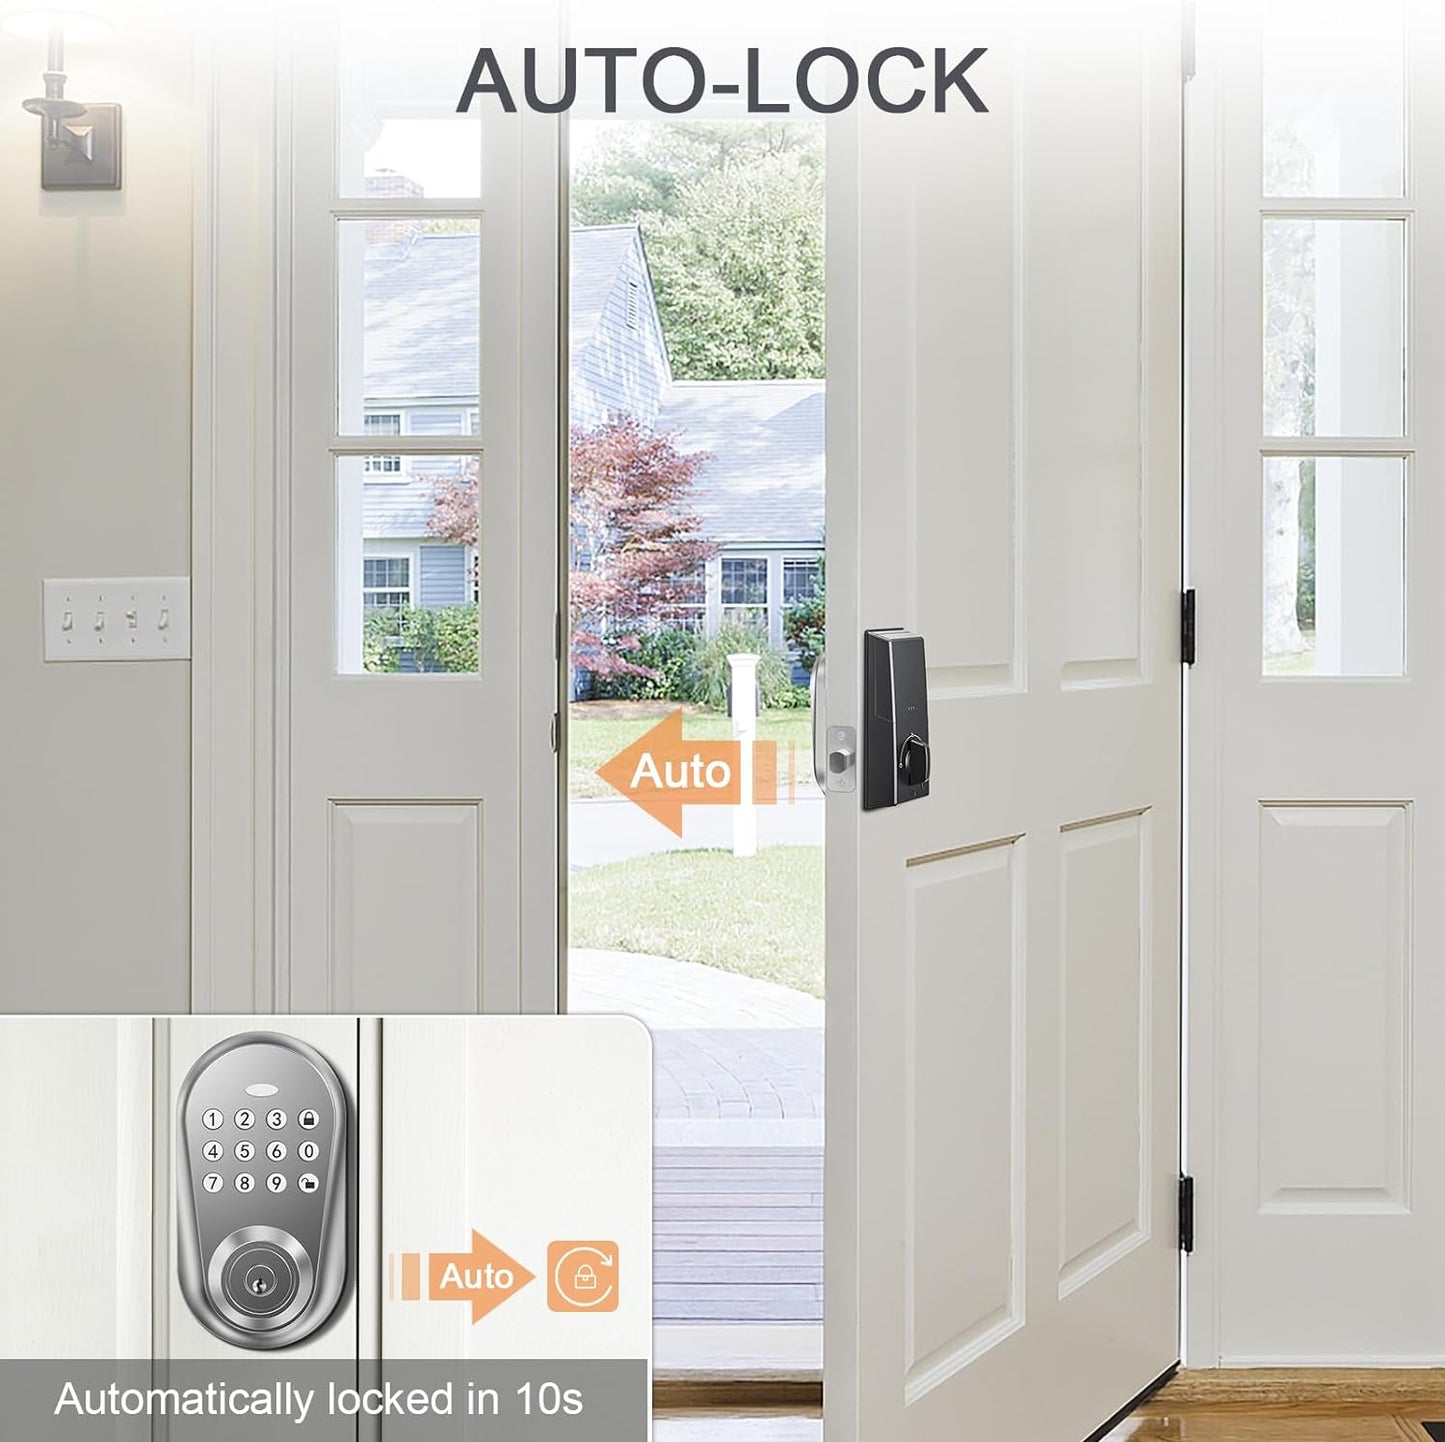 IRONZON Keyless Entry Door Lock, Electronic Door Lock with Keypad Deadbolt (D150S)